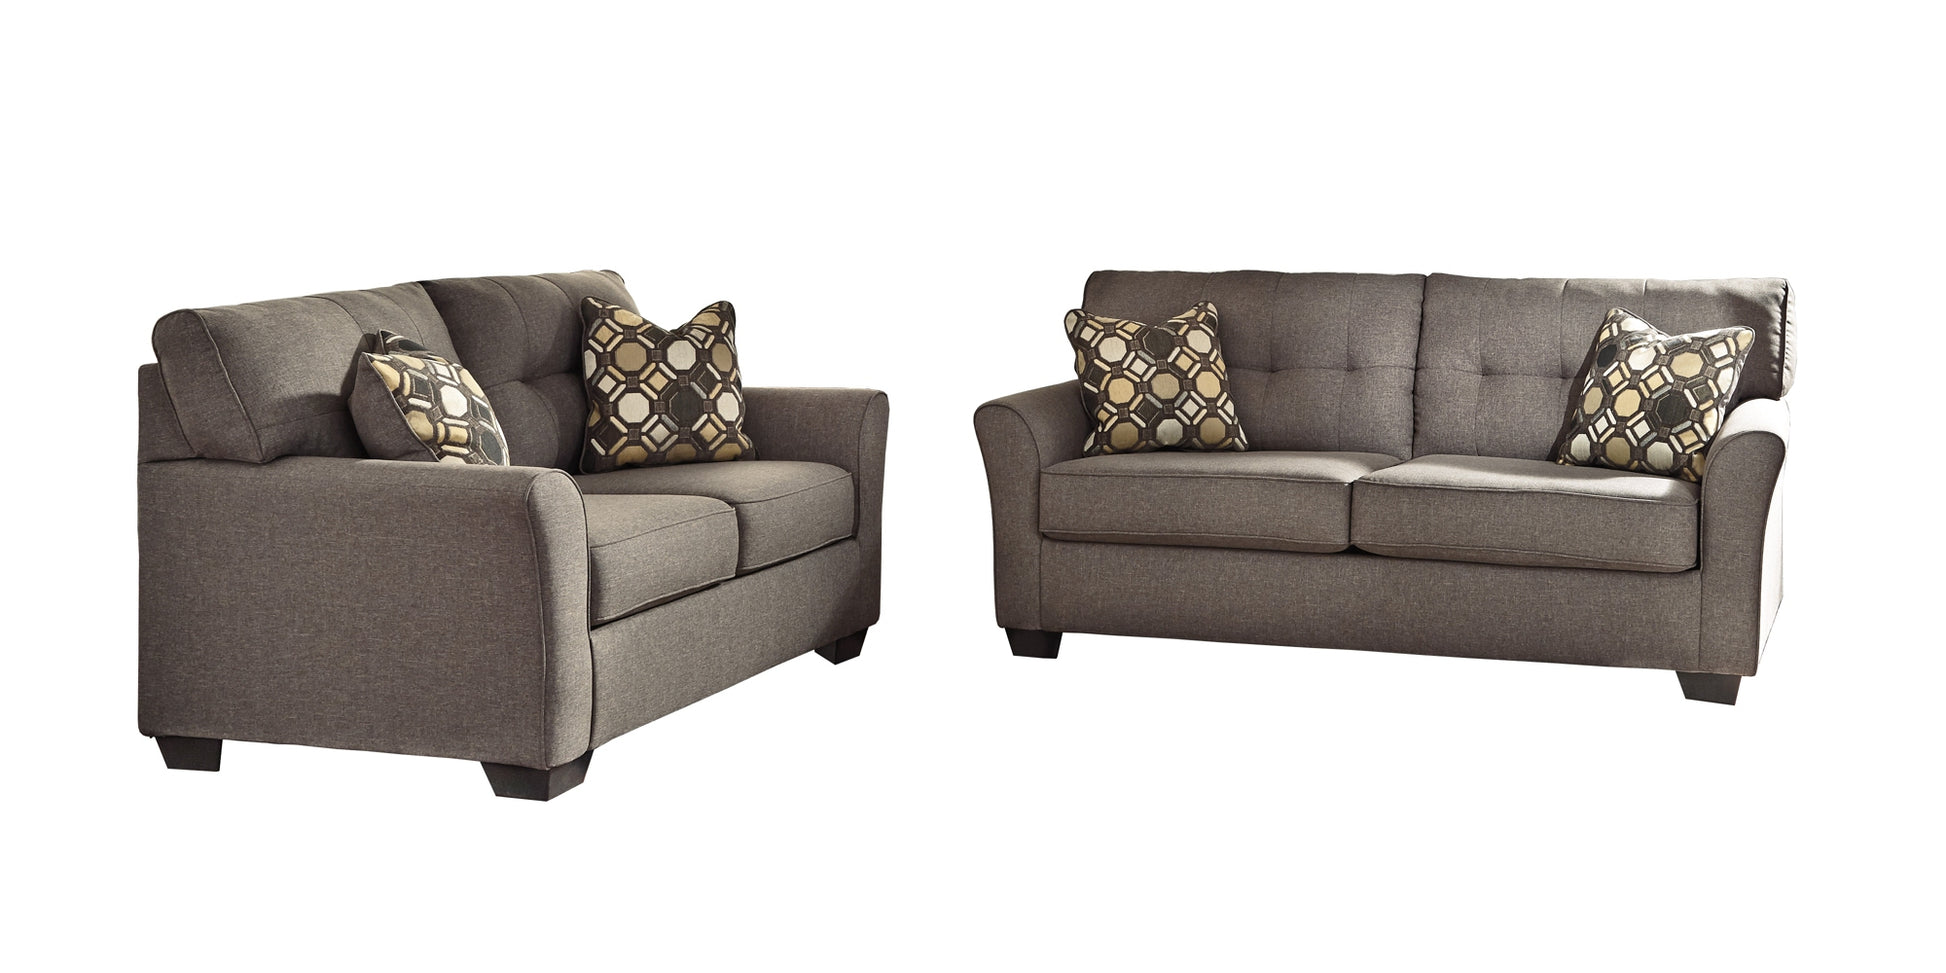 Tibbee Sofa And Loveseat Furniture